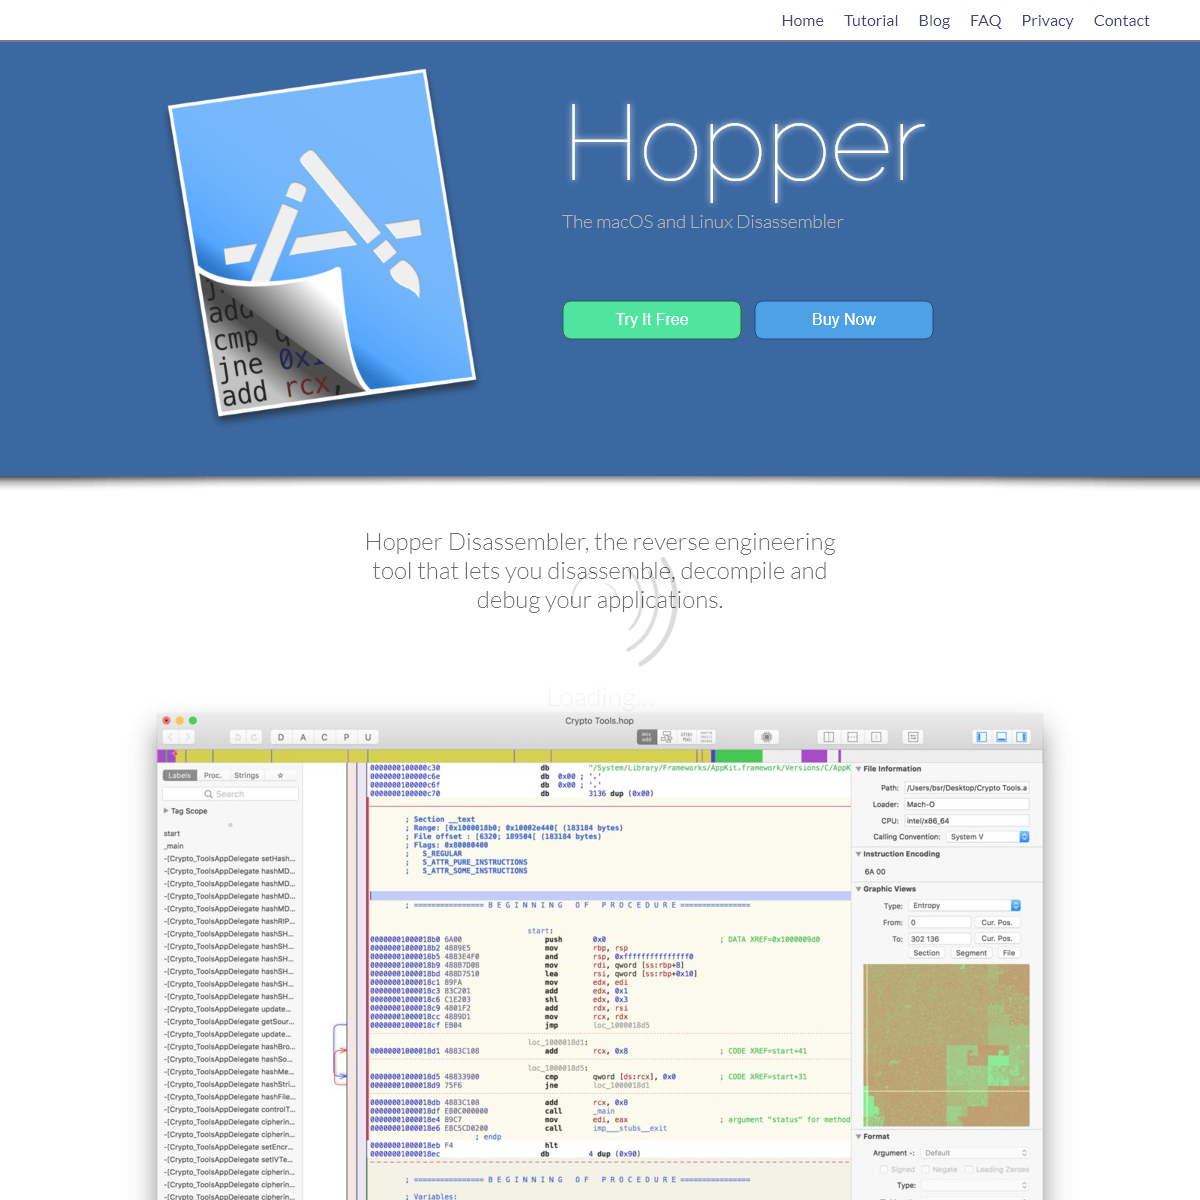 A complete backup of hopperapp.com